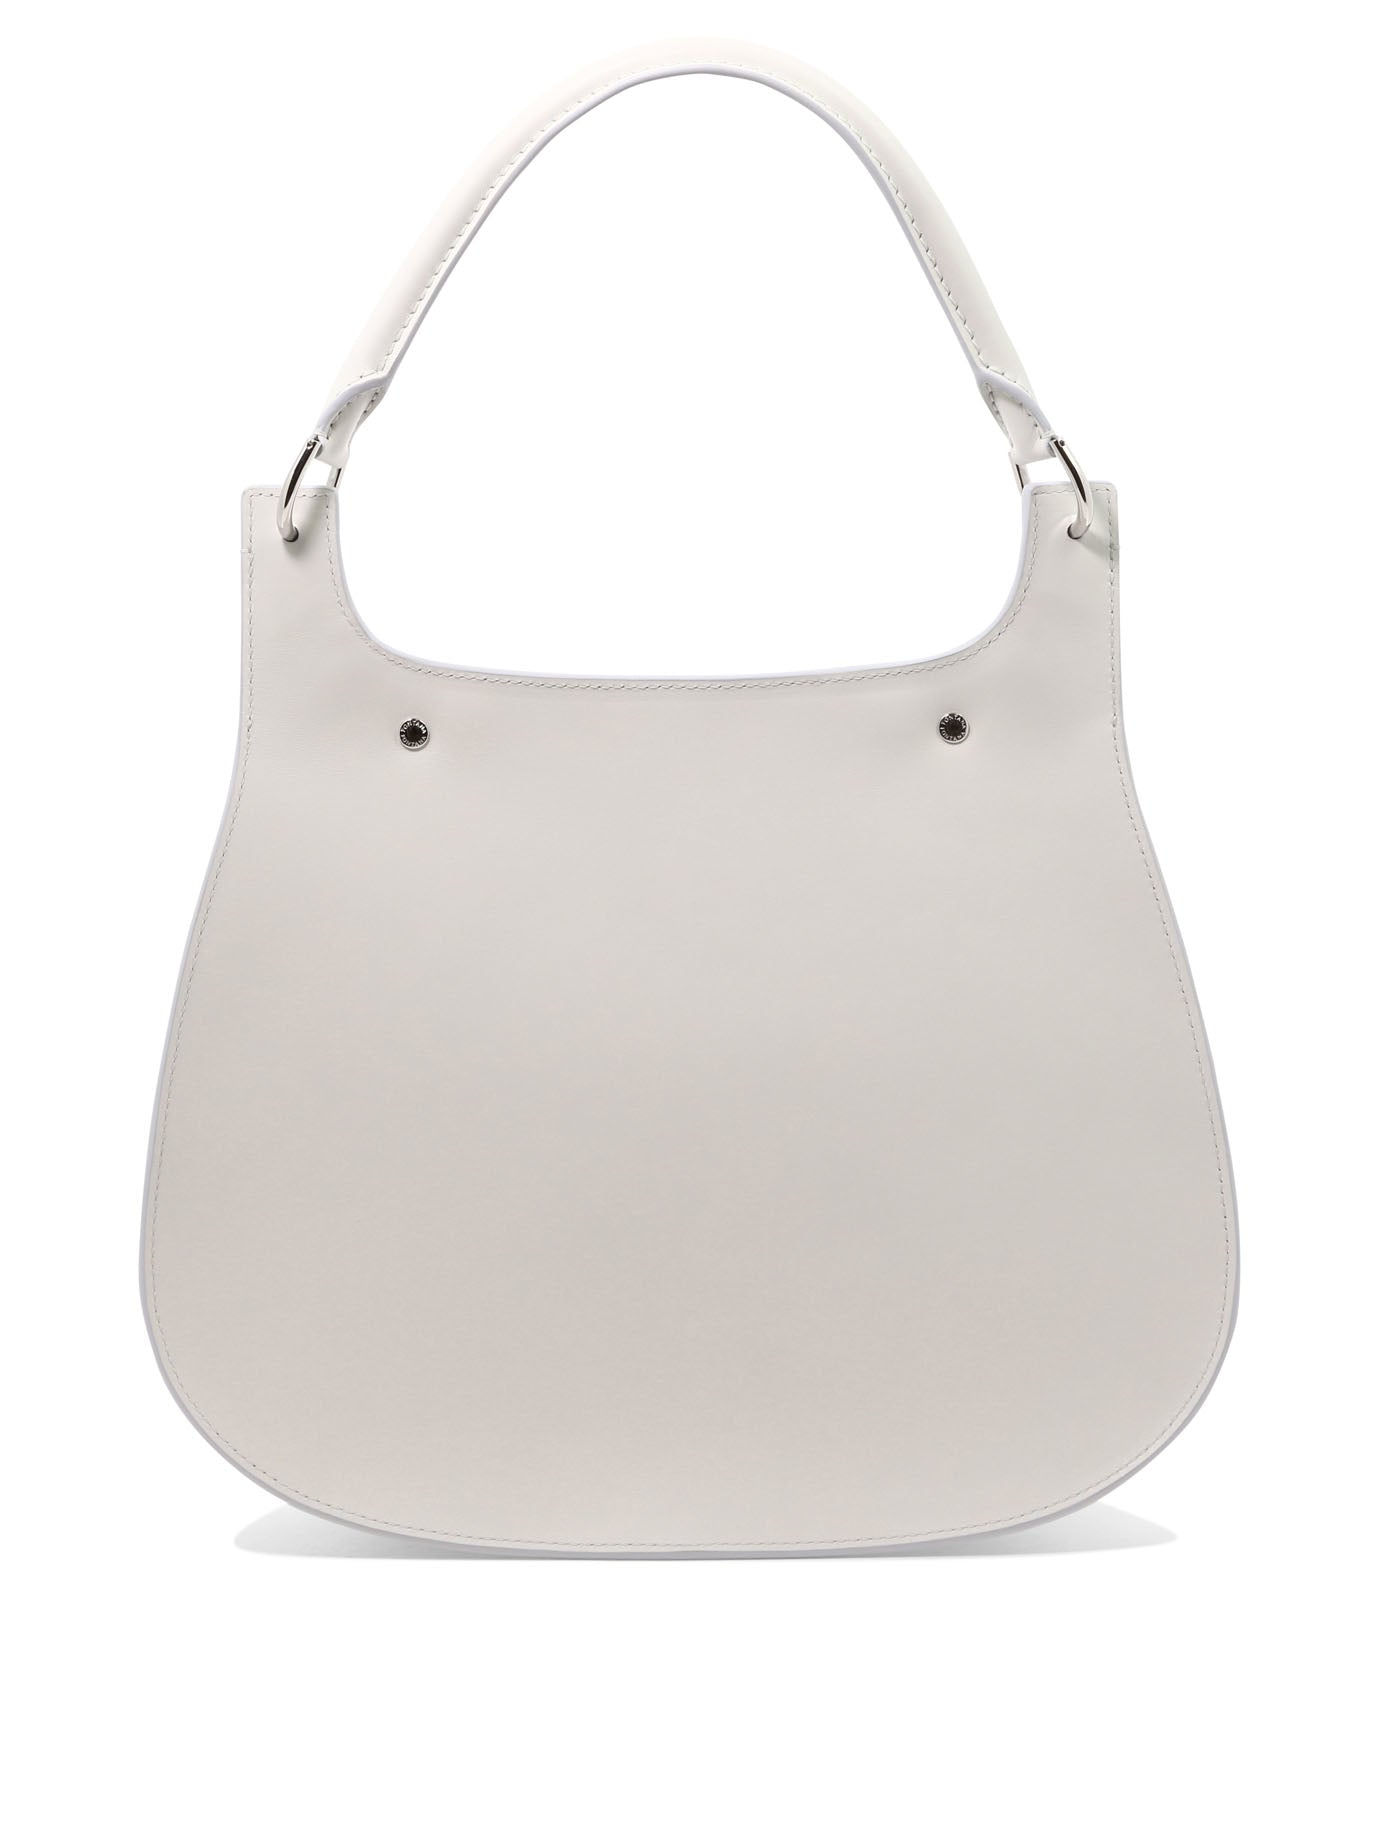 Shop Fontana Milano 1915 White Chelsea Media Shoulder Handbag For Women